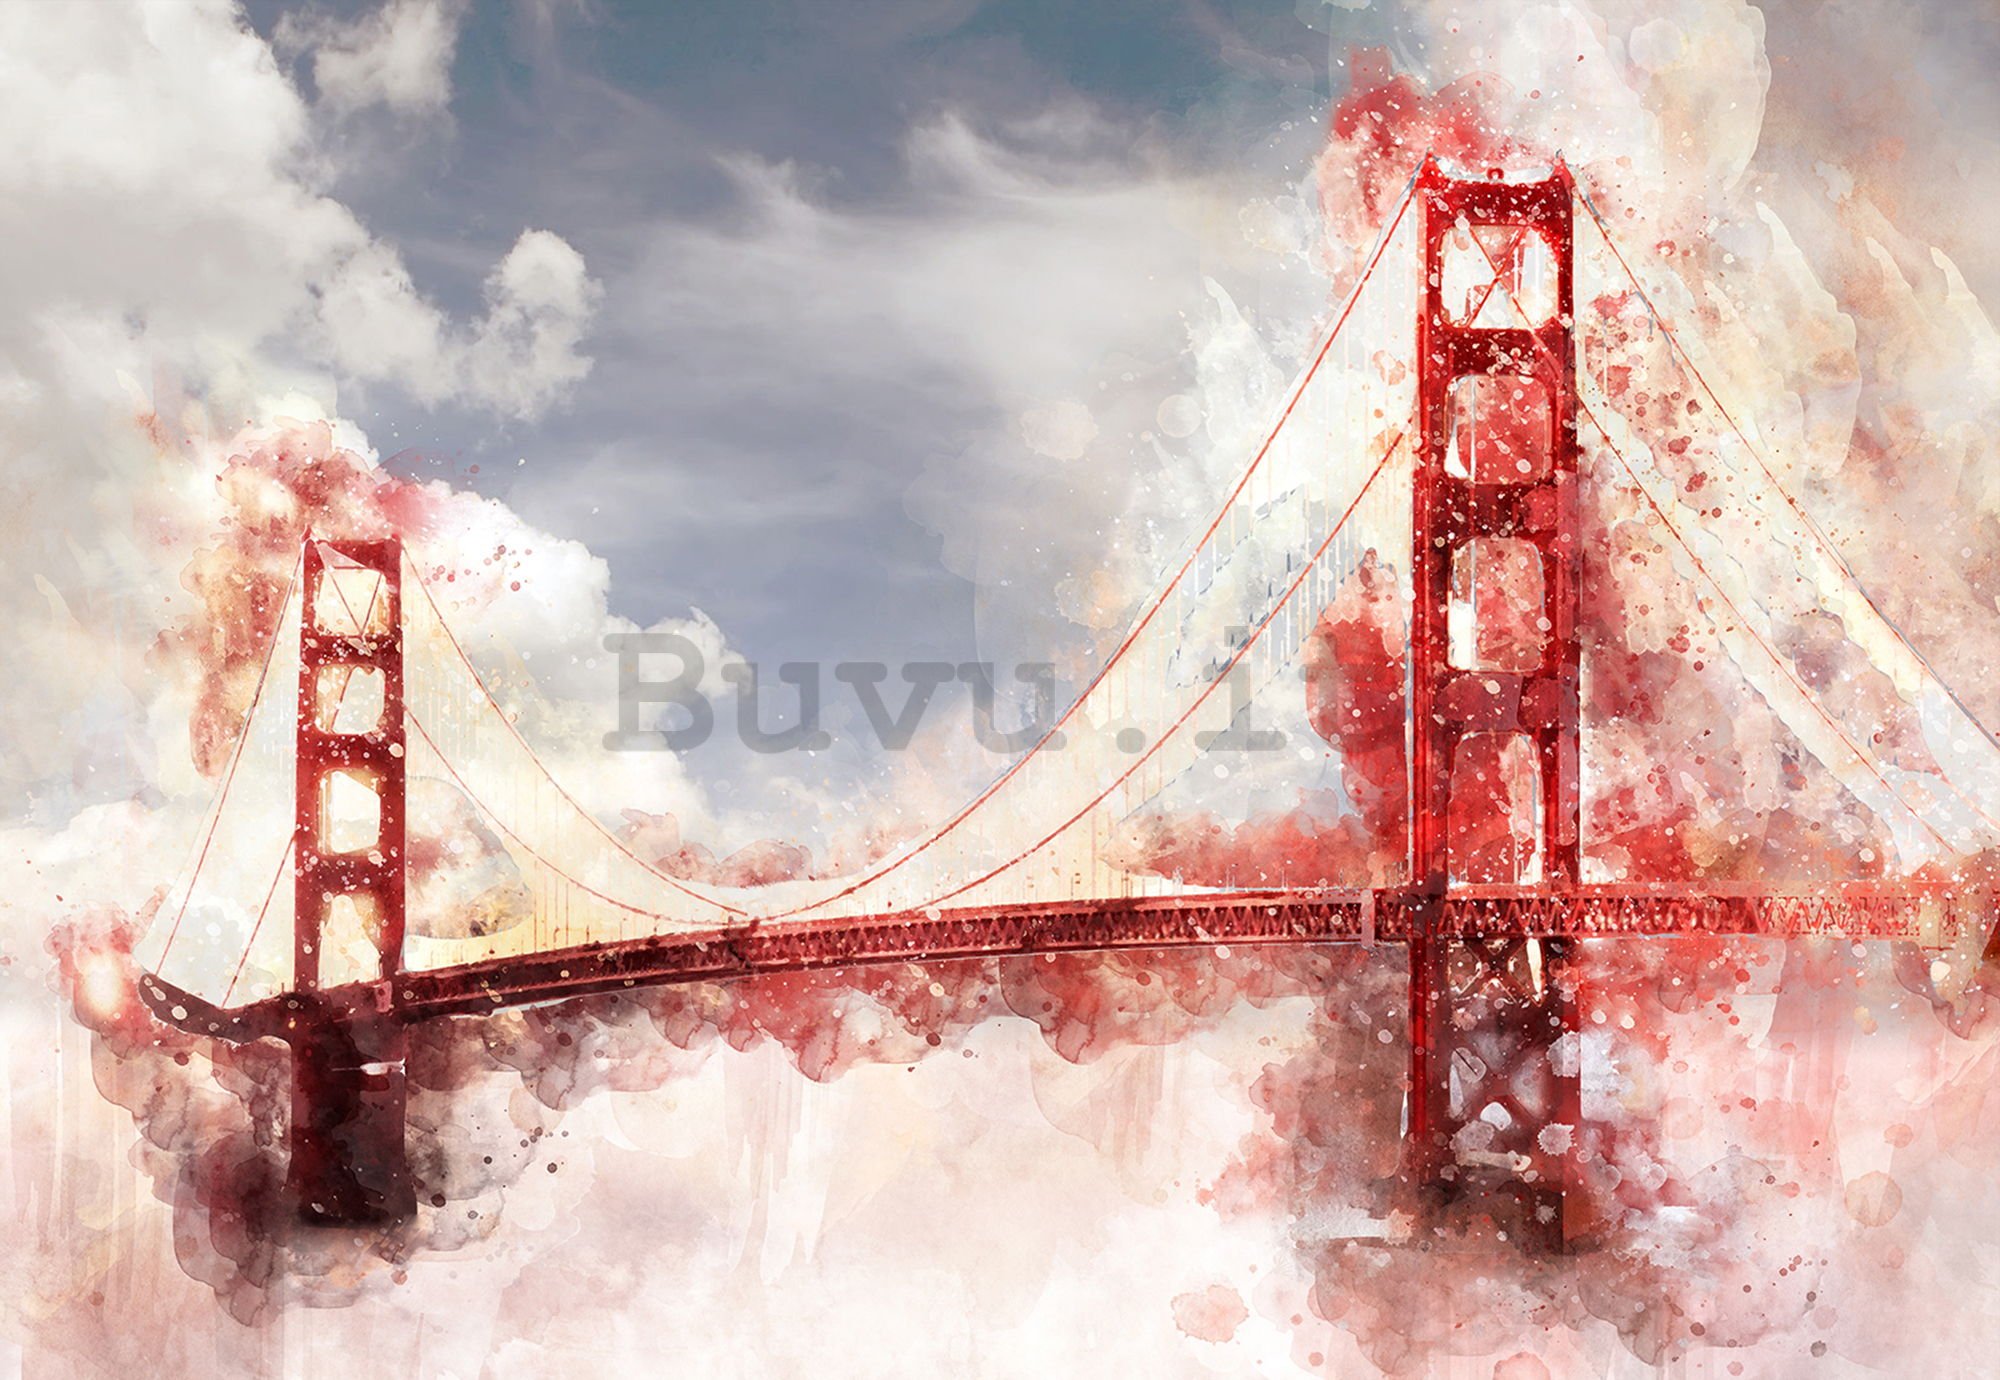 Fotomurale: Golden Gate Bridge (dipinto) - 254x368 cm